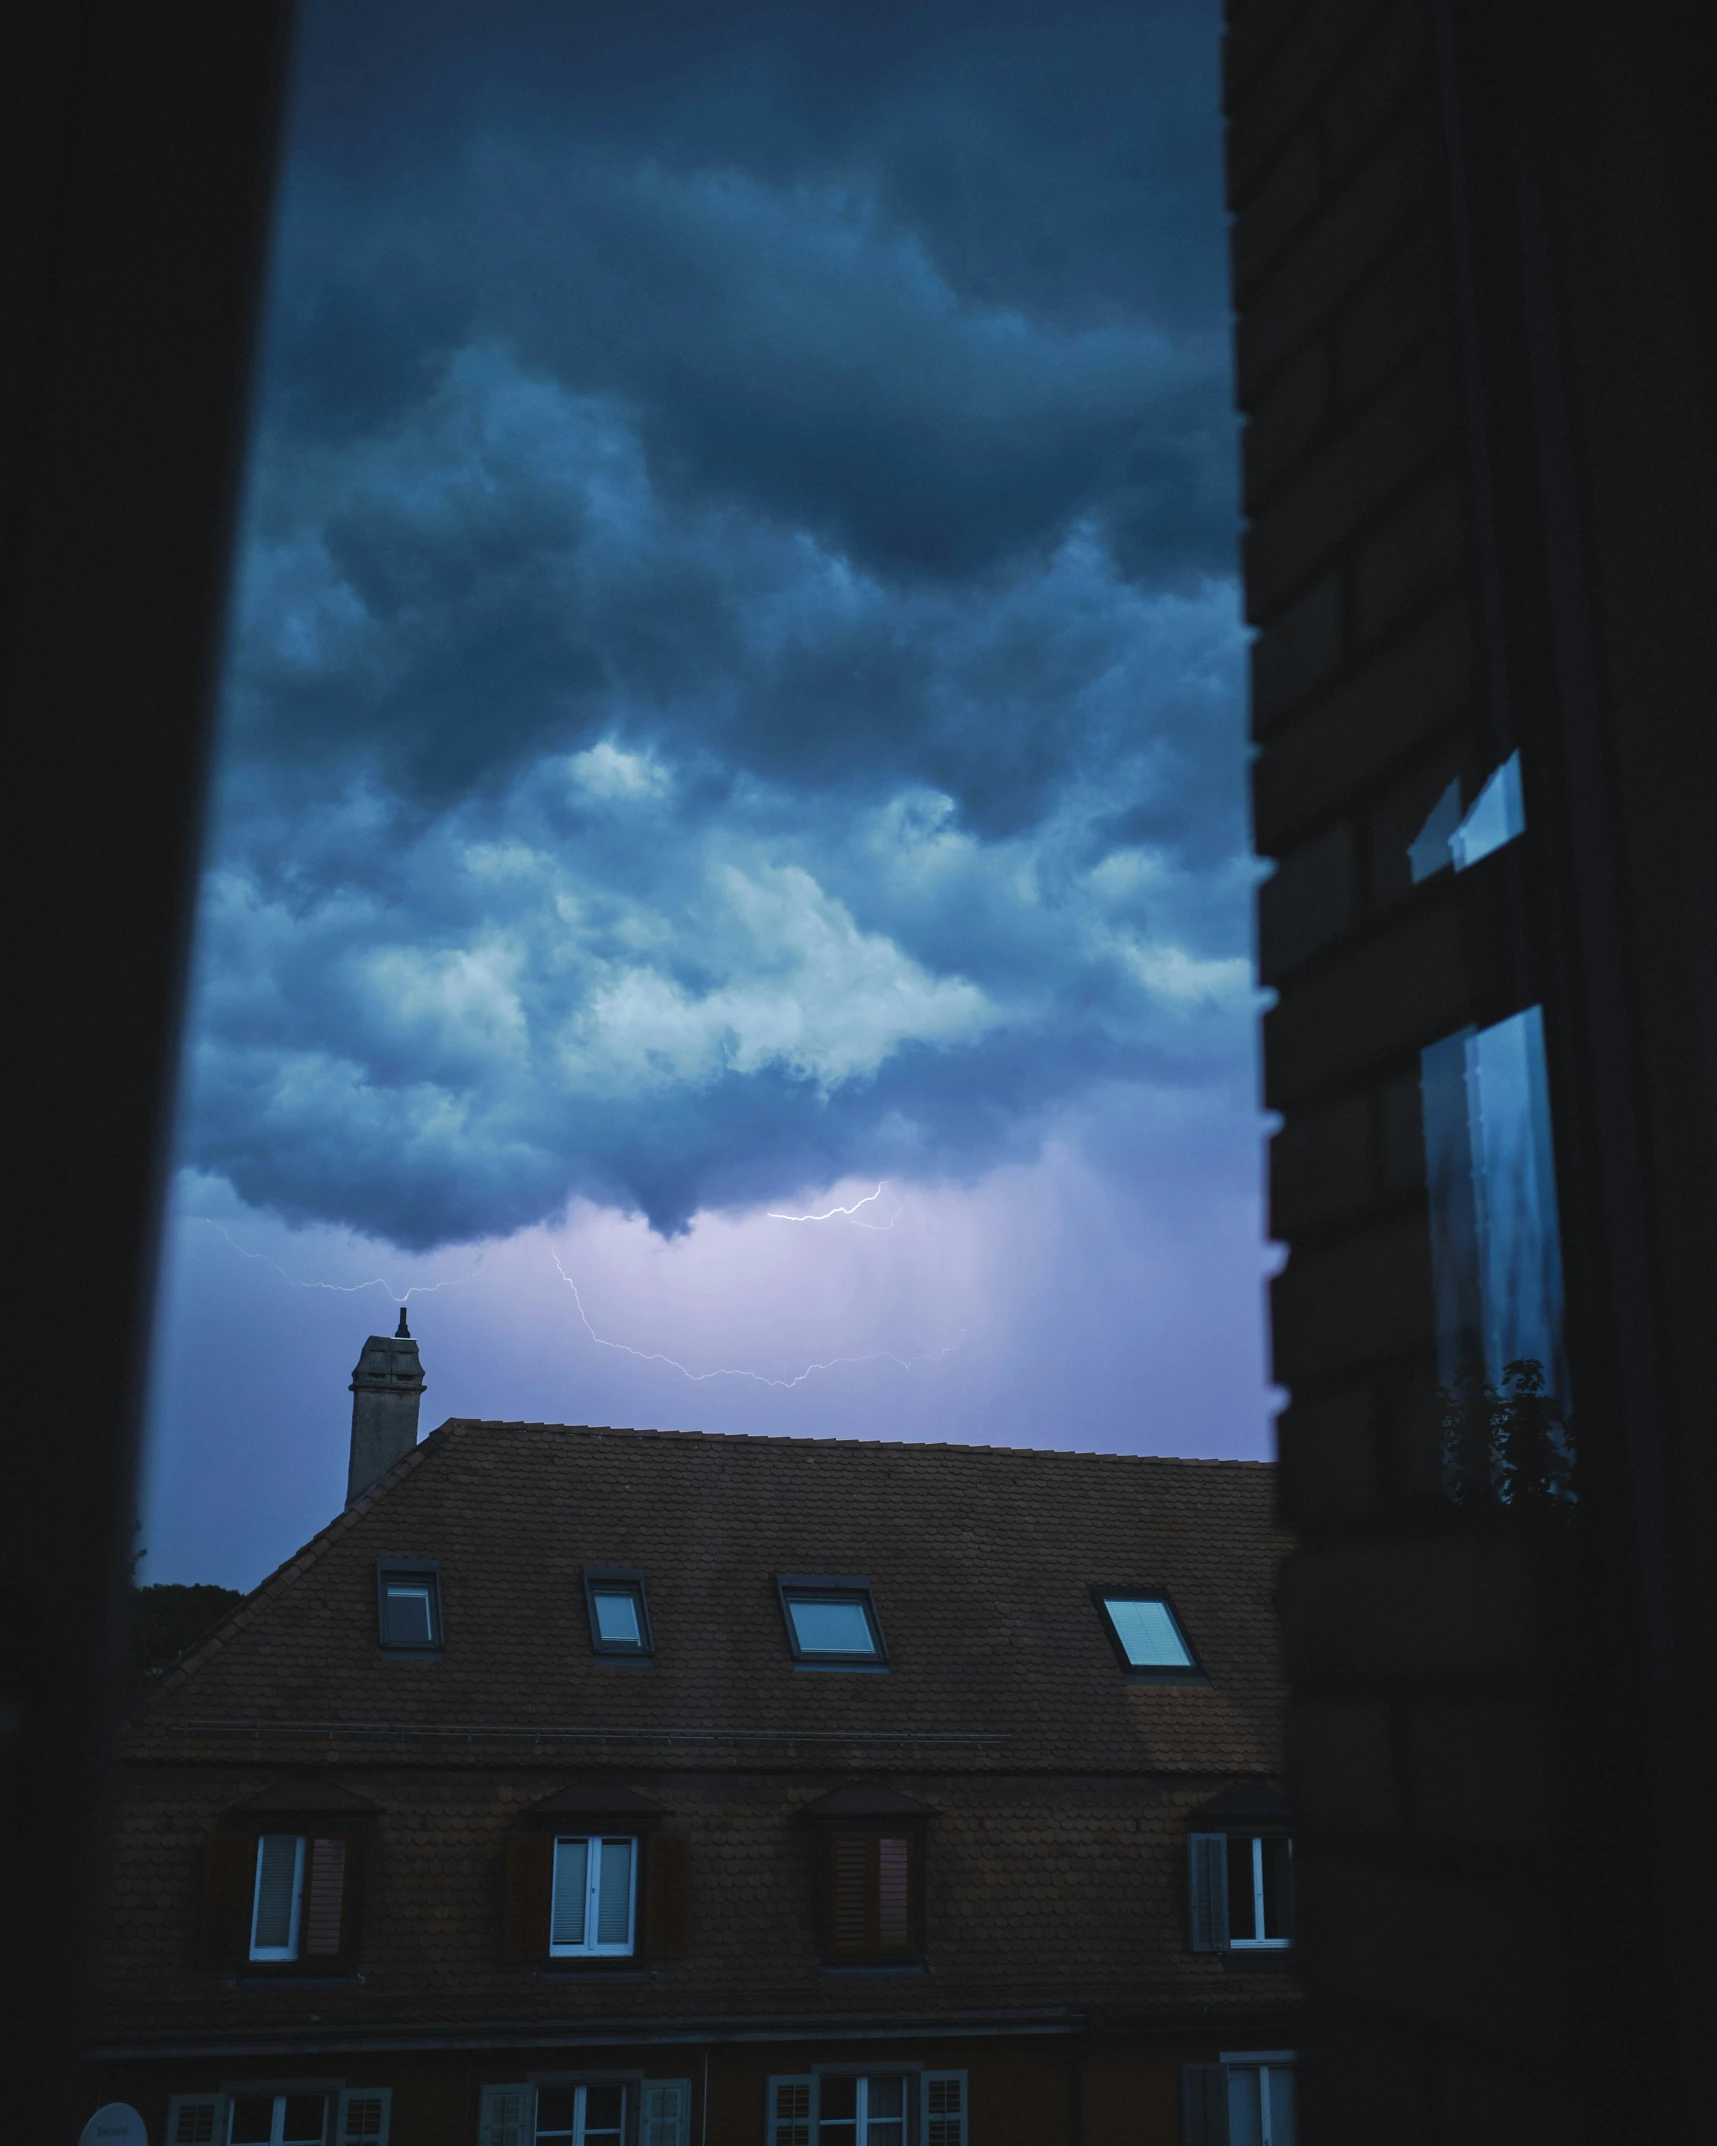 a city storm rolls through the sky over buildings